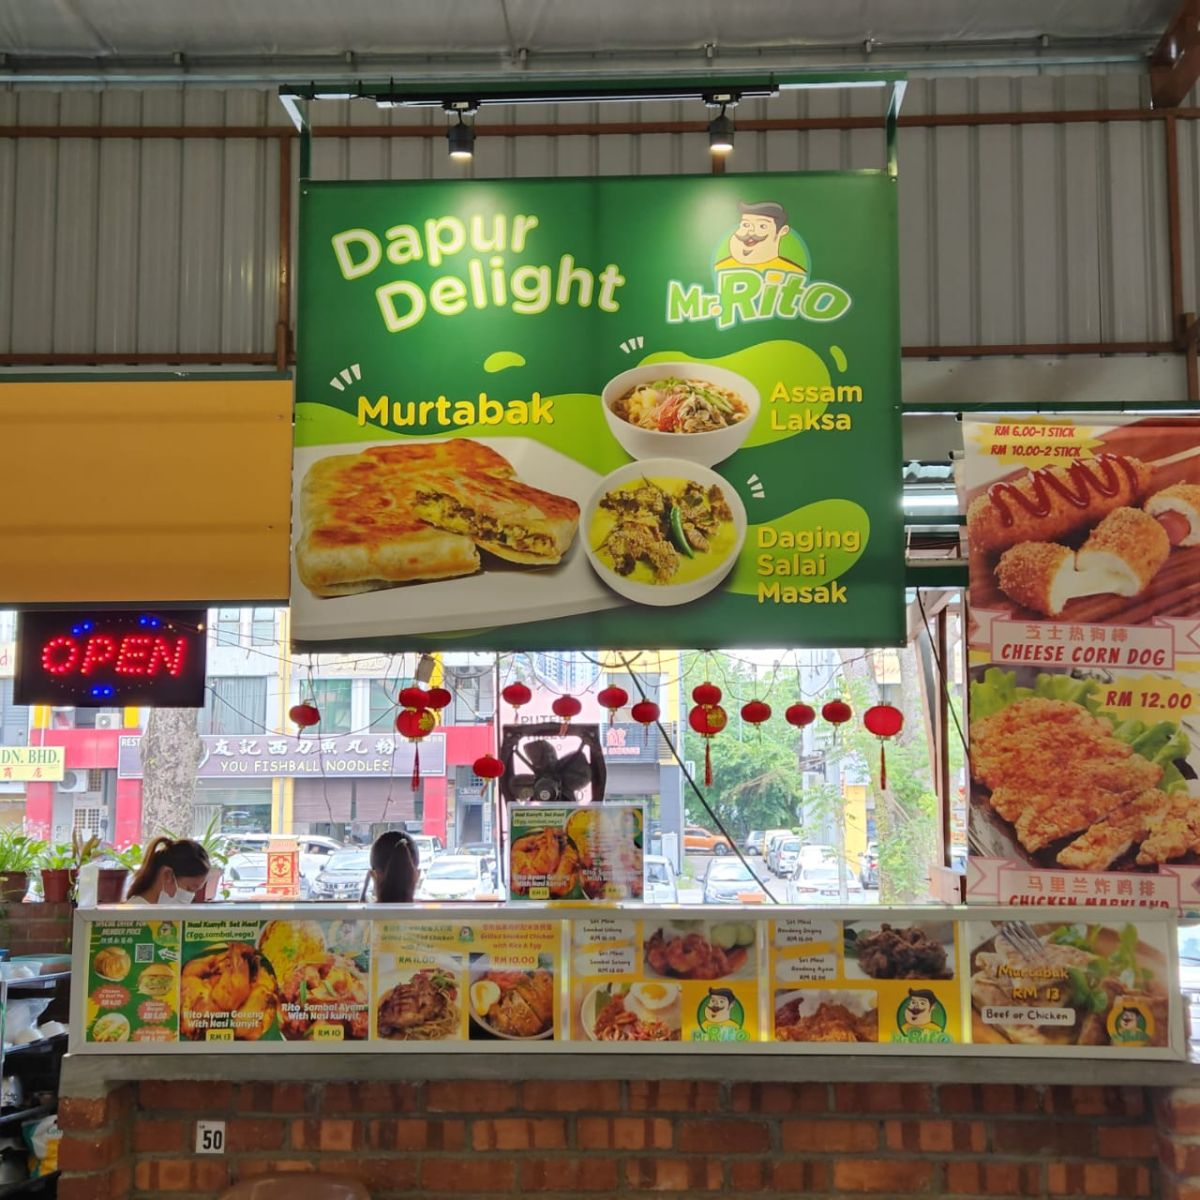 928 Food Court, Puteri Mart, Puchong